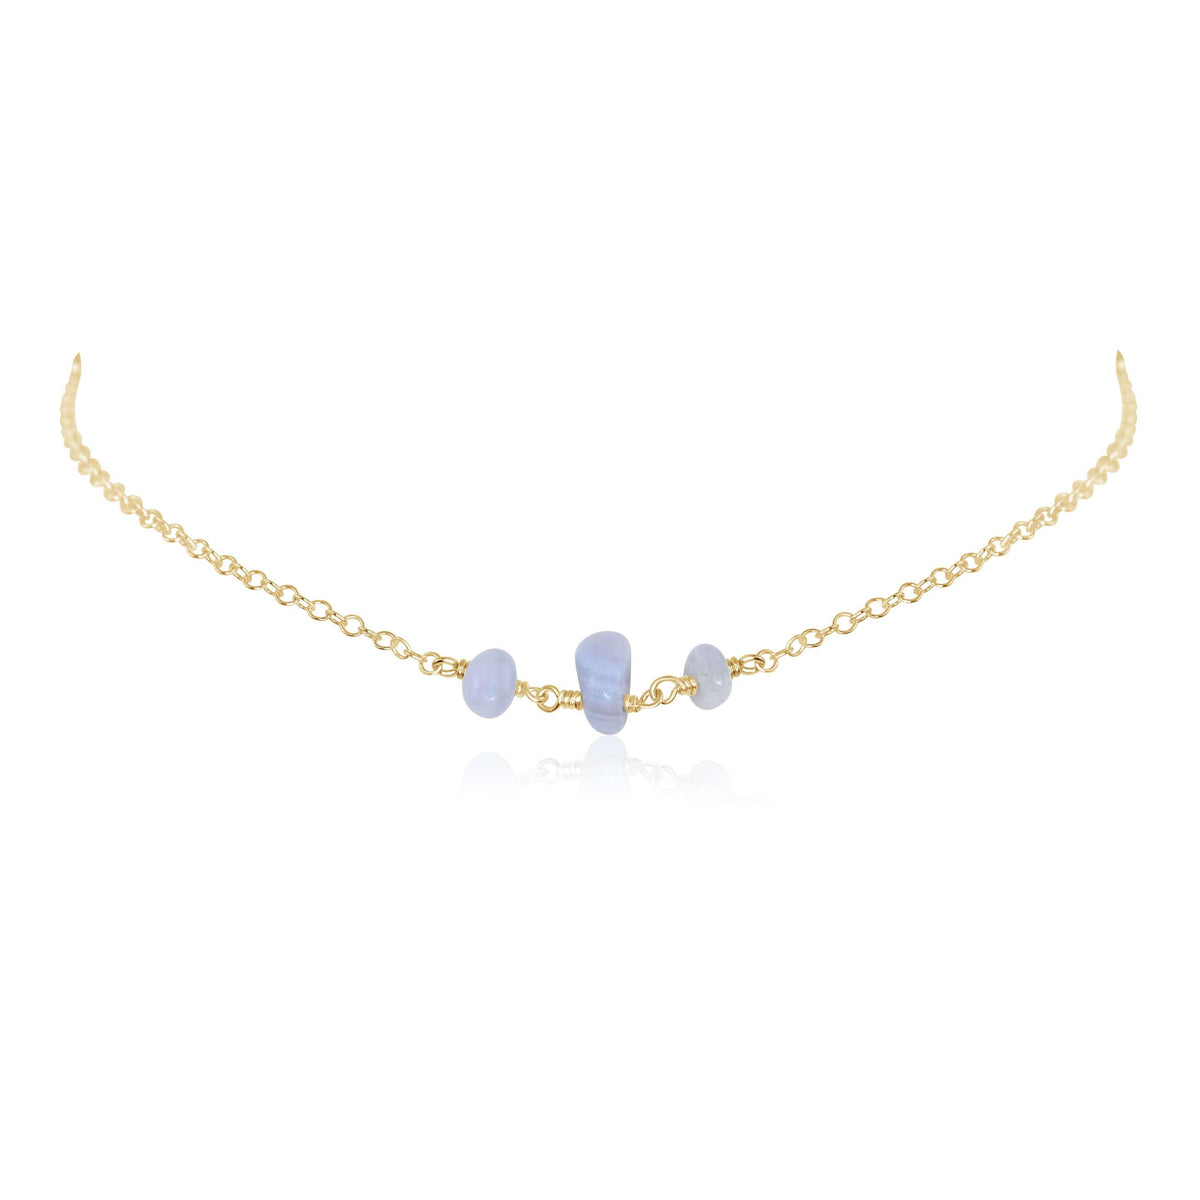 Beaded Chain Choker - Blue Lace Agate - 14K Gold Fill - Luna Tide Handmade Jewellery